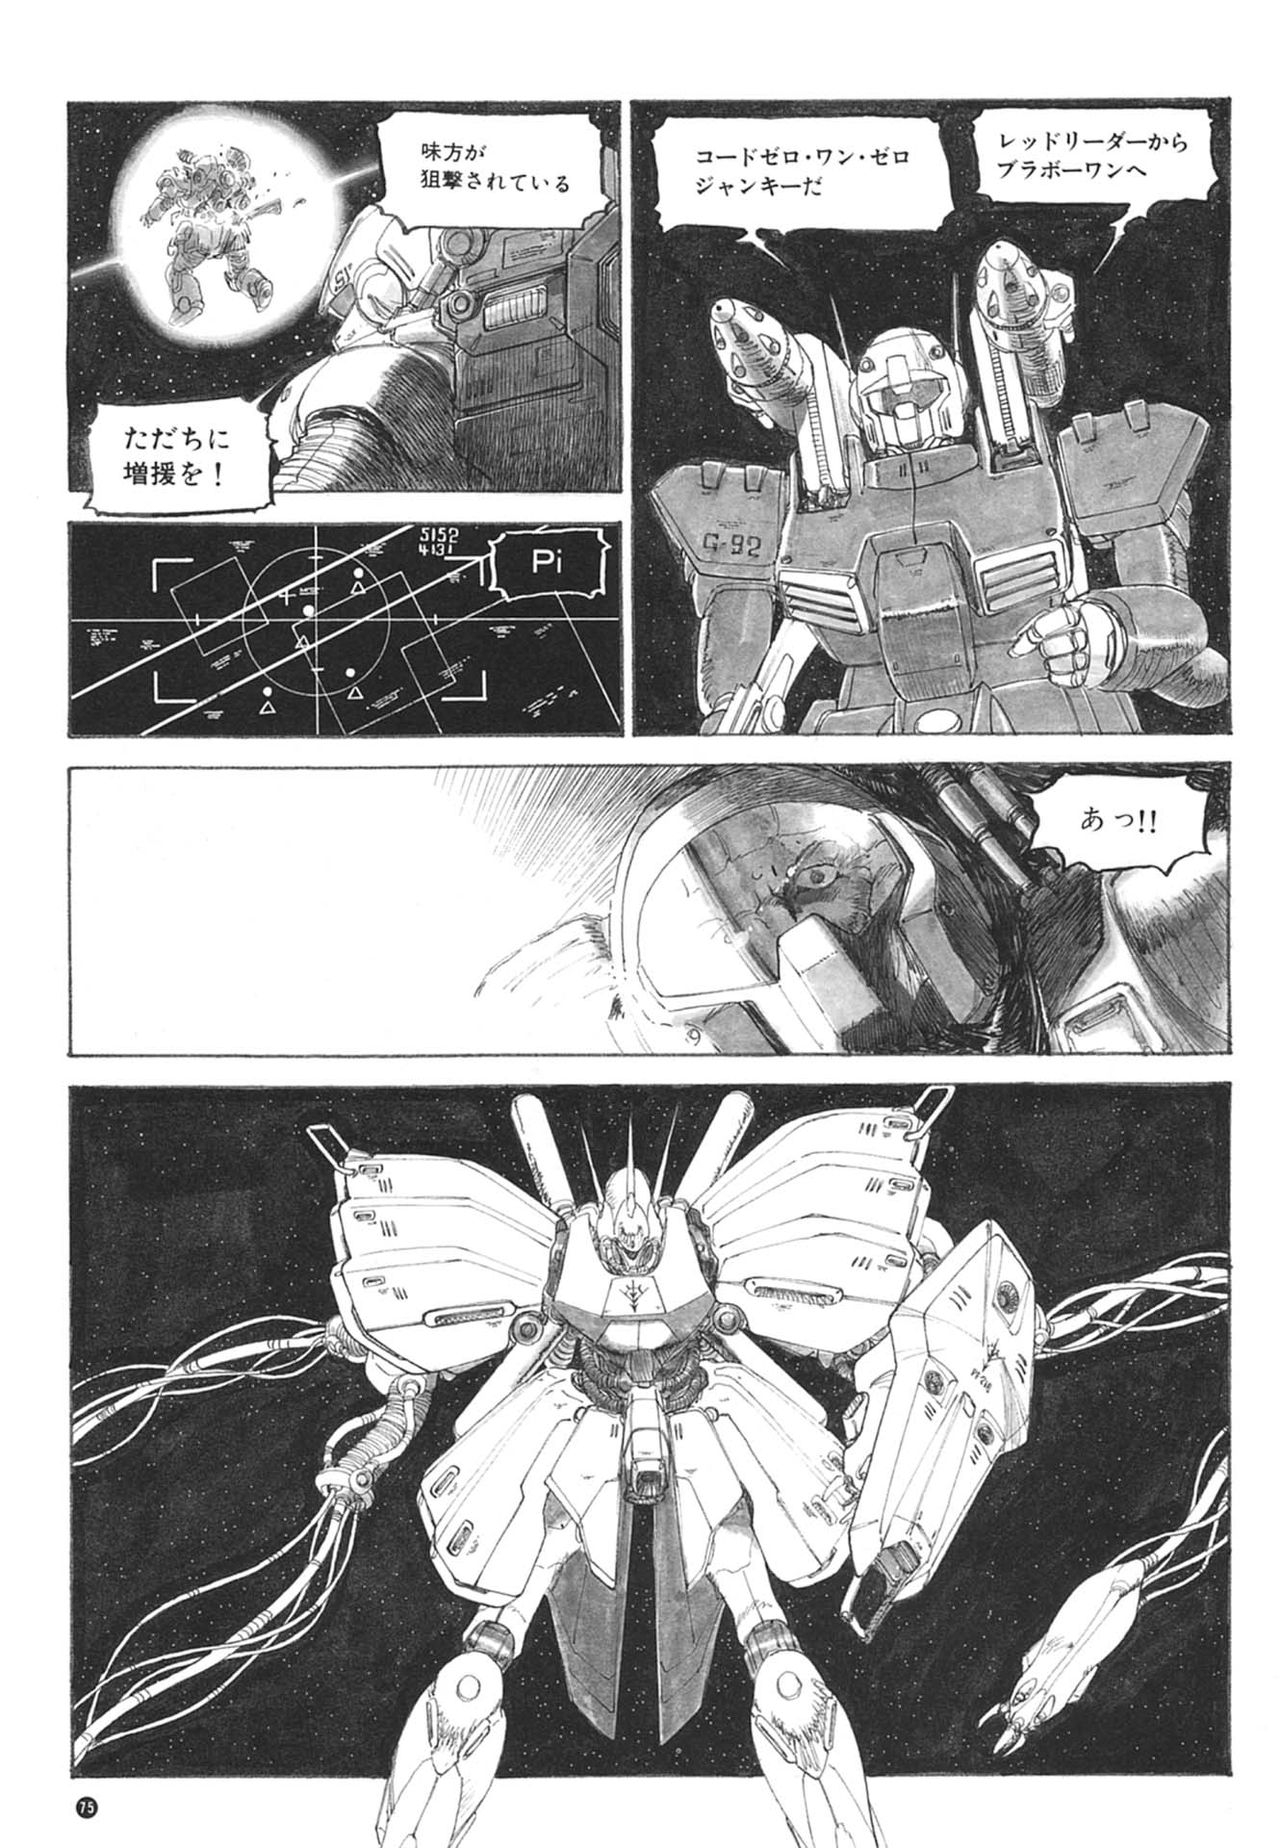 [Kazuhisa Kondo] Kazuhisa Kondo 2D & 3D Works - Go Ahead - From Mobile Suit Gundam to Original Mechanism 74